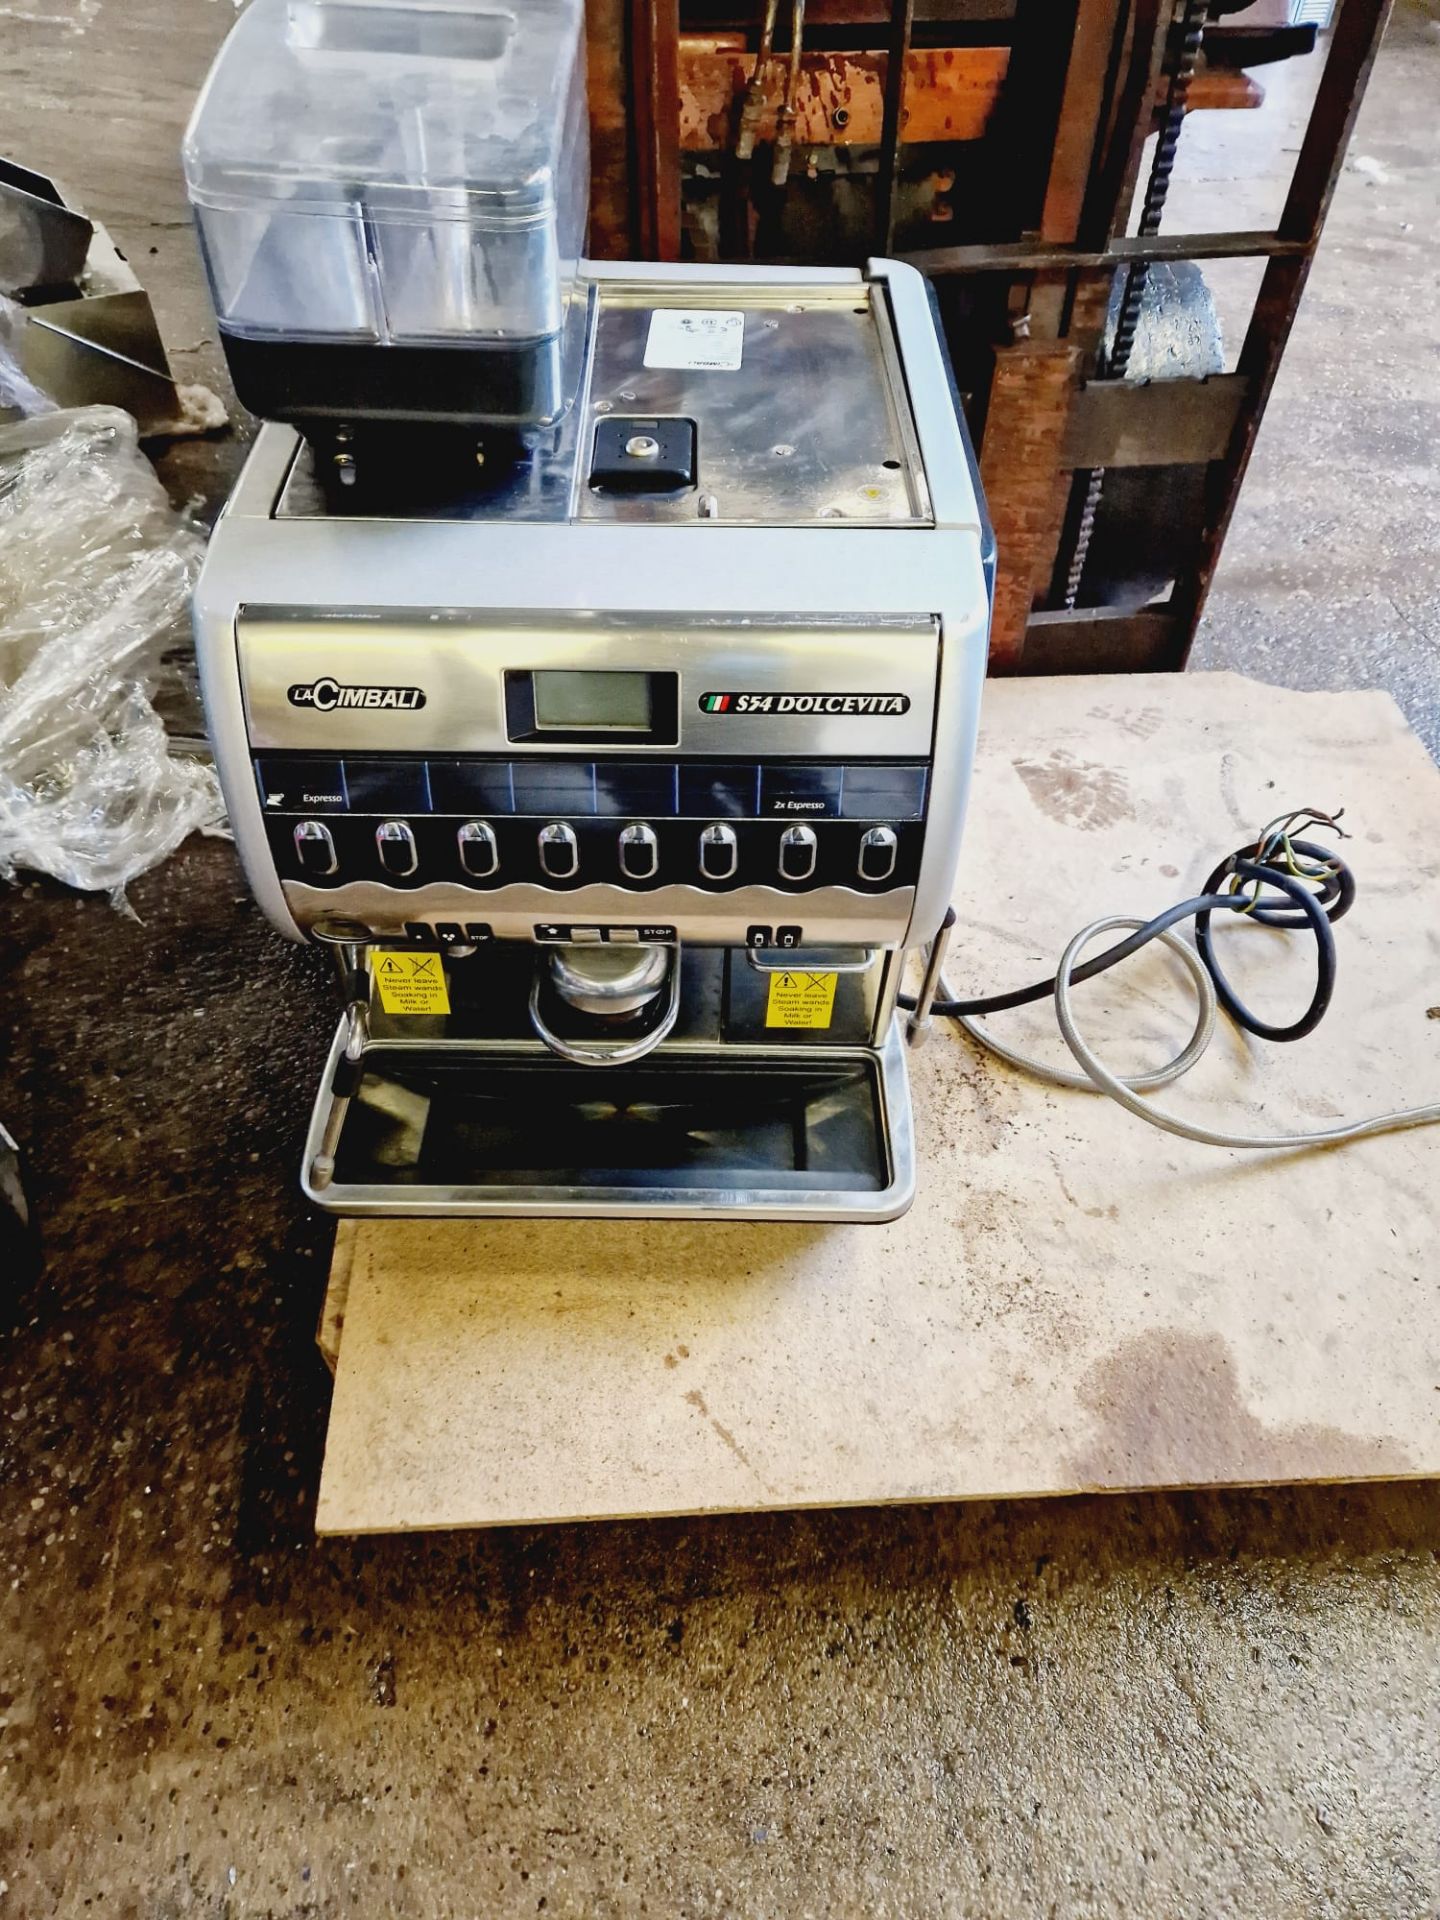 LACIMBALI S54 DOLCEVITA AUTOMATIC COFFEE MACHINE - UNTESTED